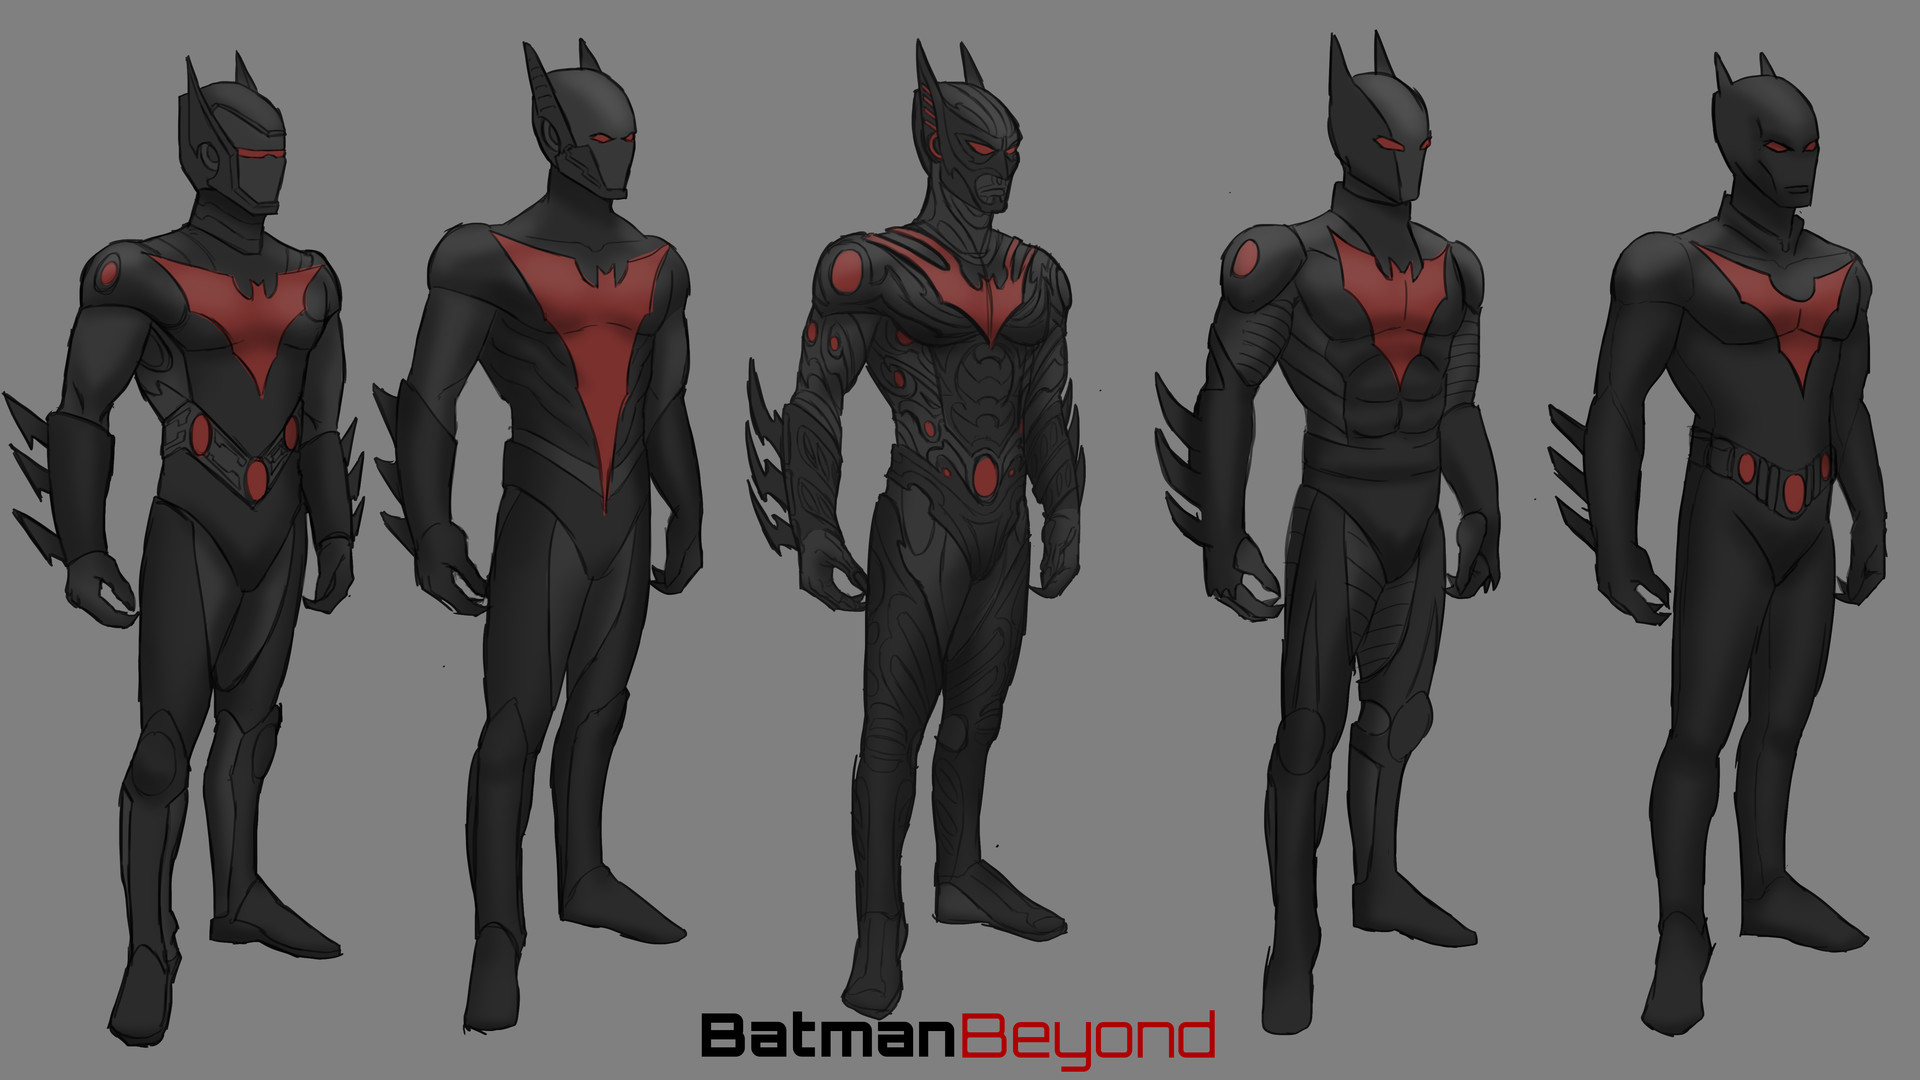 ArtStation - Batman Beyond Concept